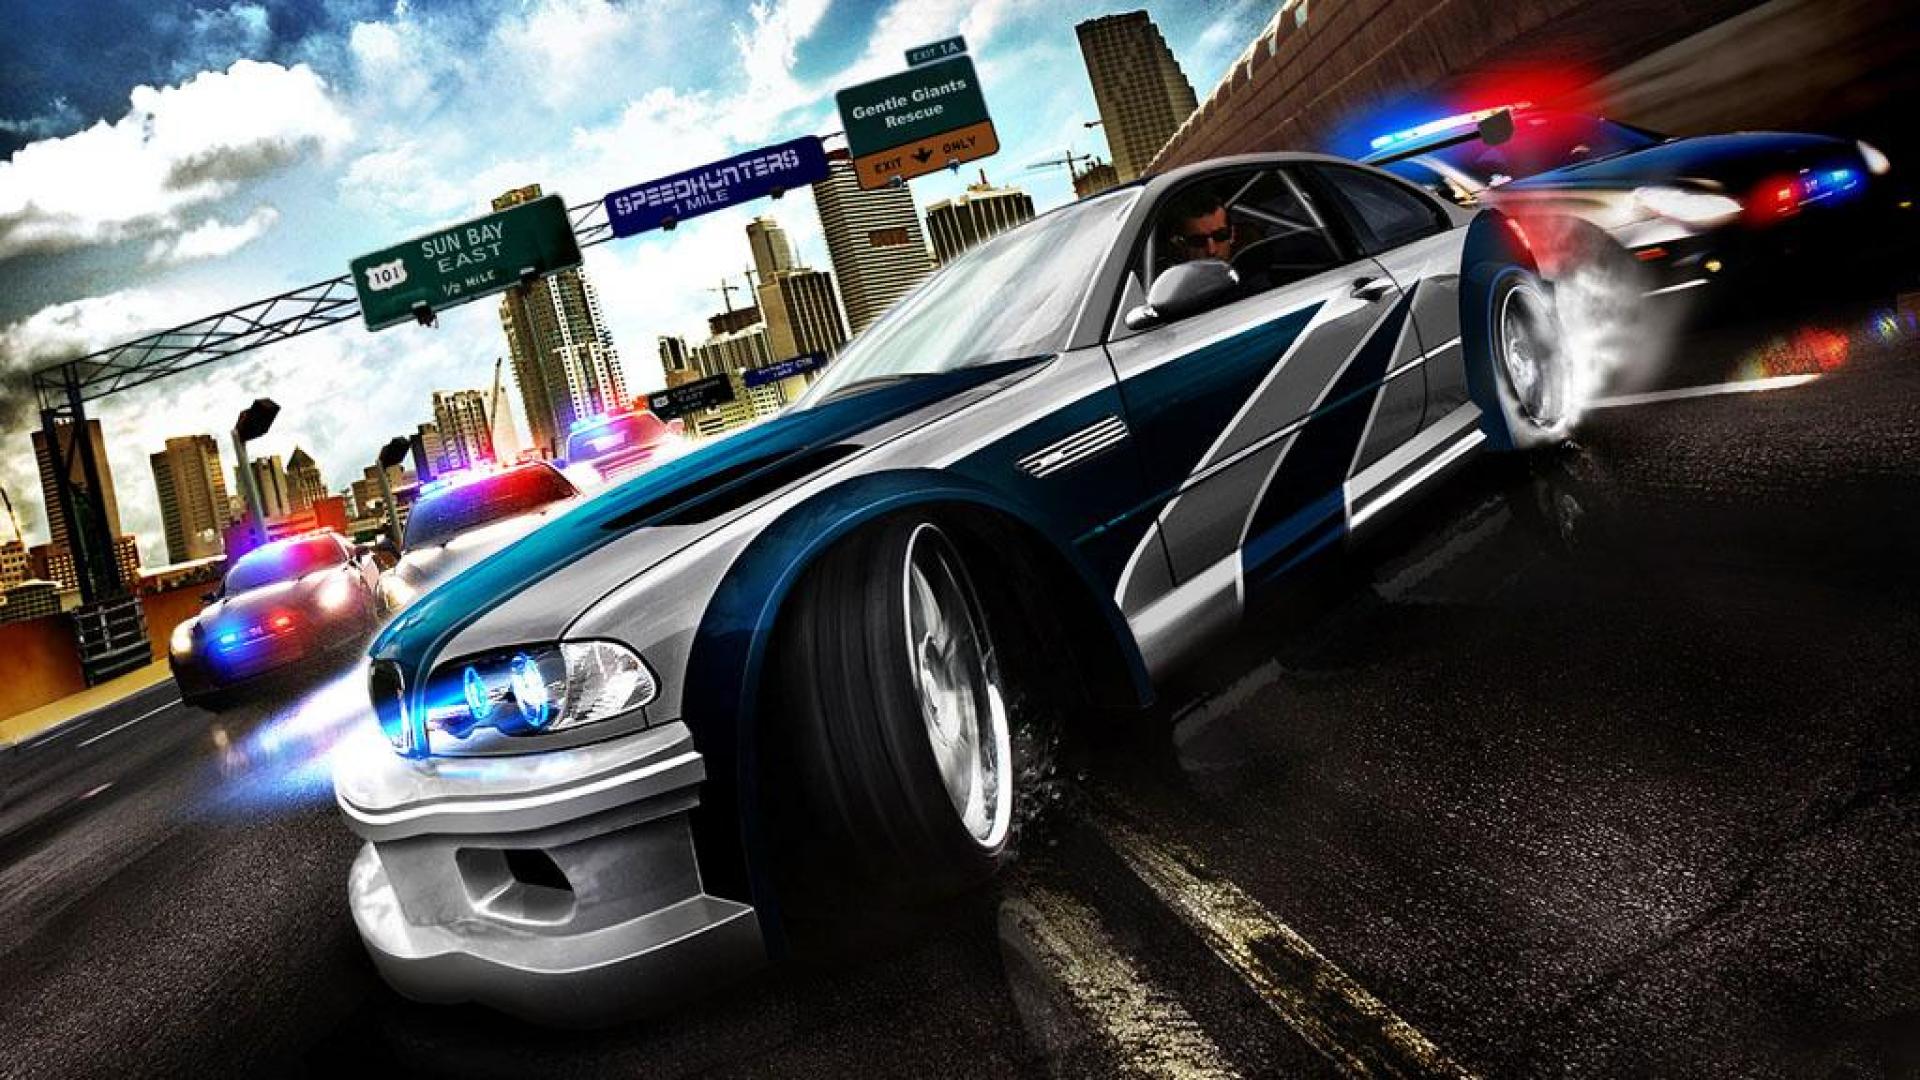 50+] Need for Speed Wallpaper Download - WallpaperSafari